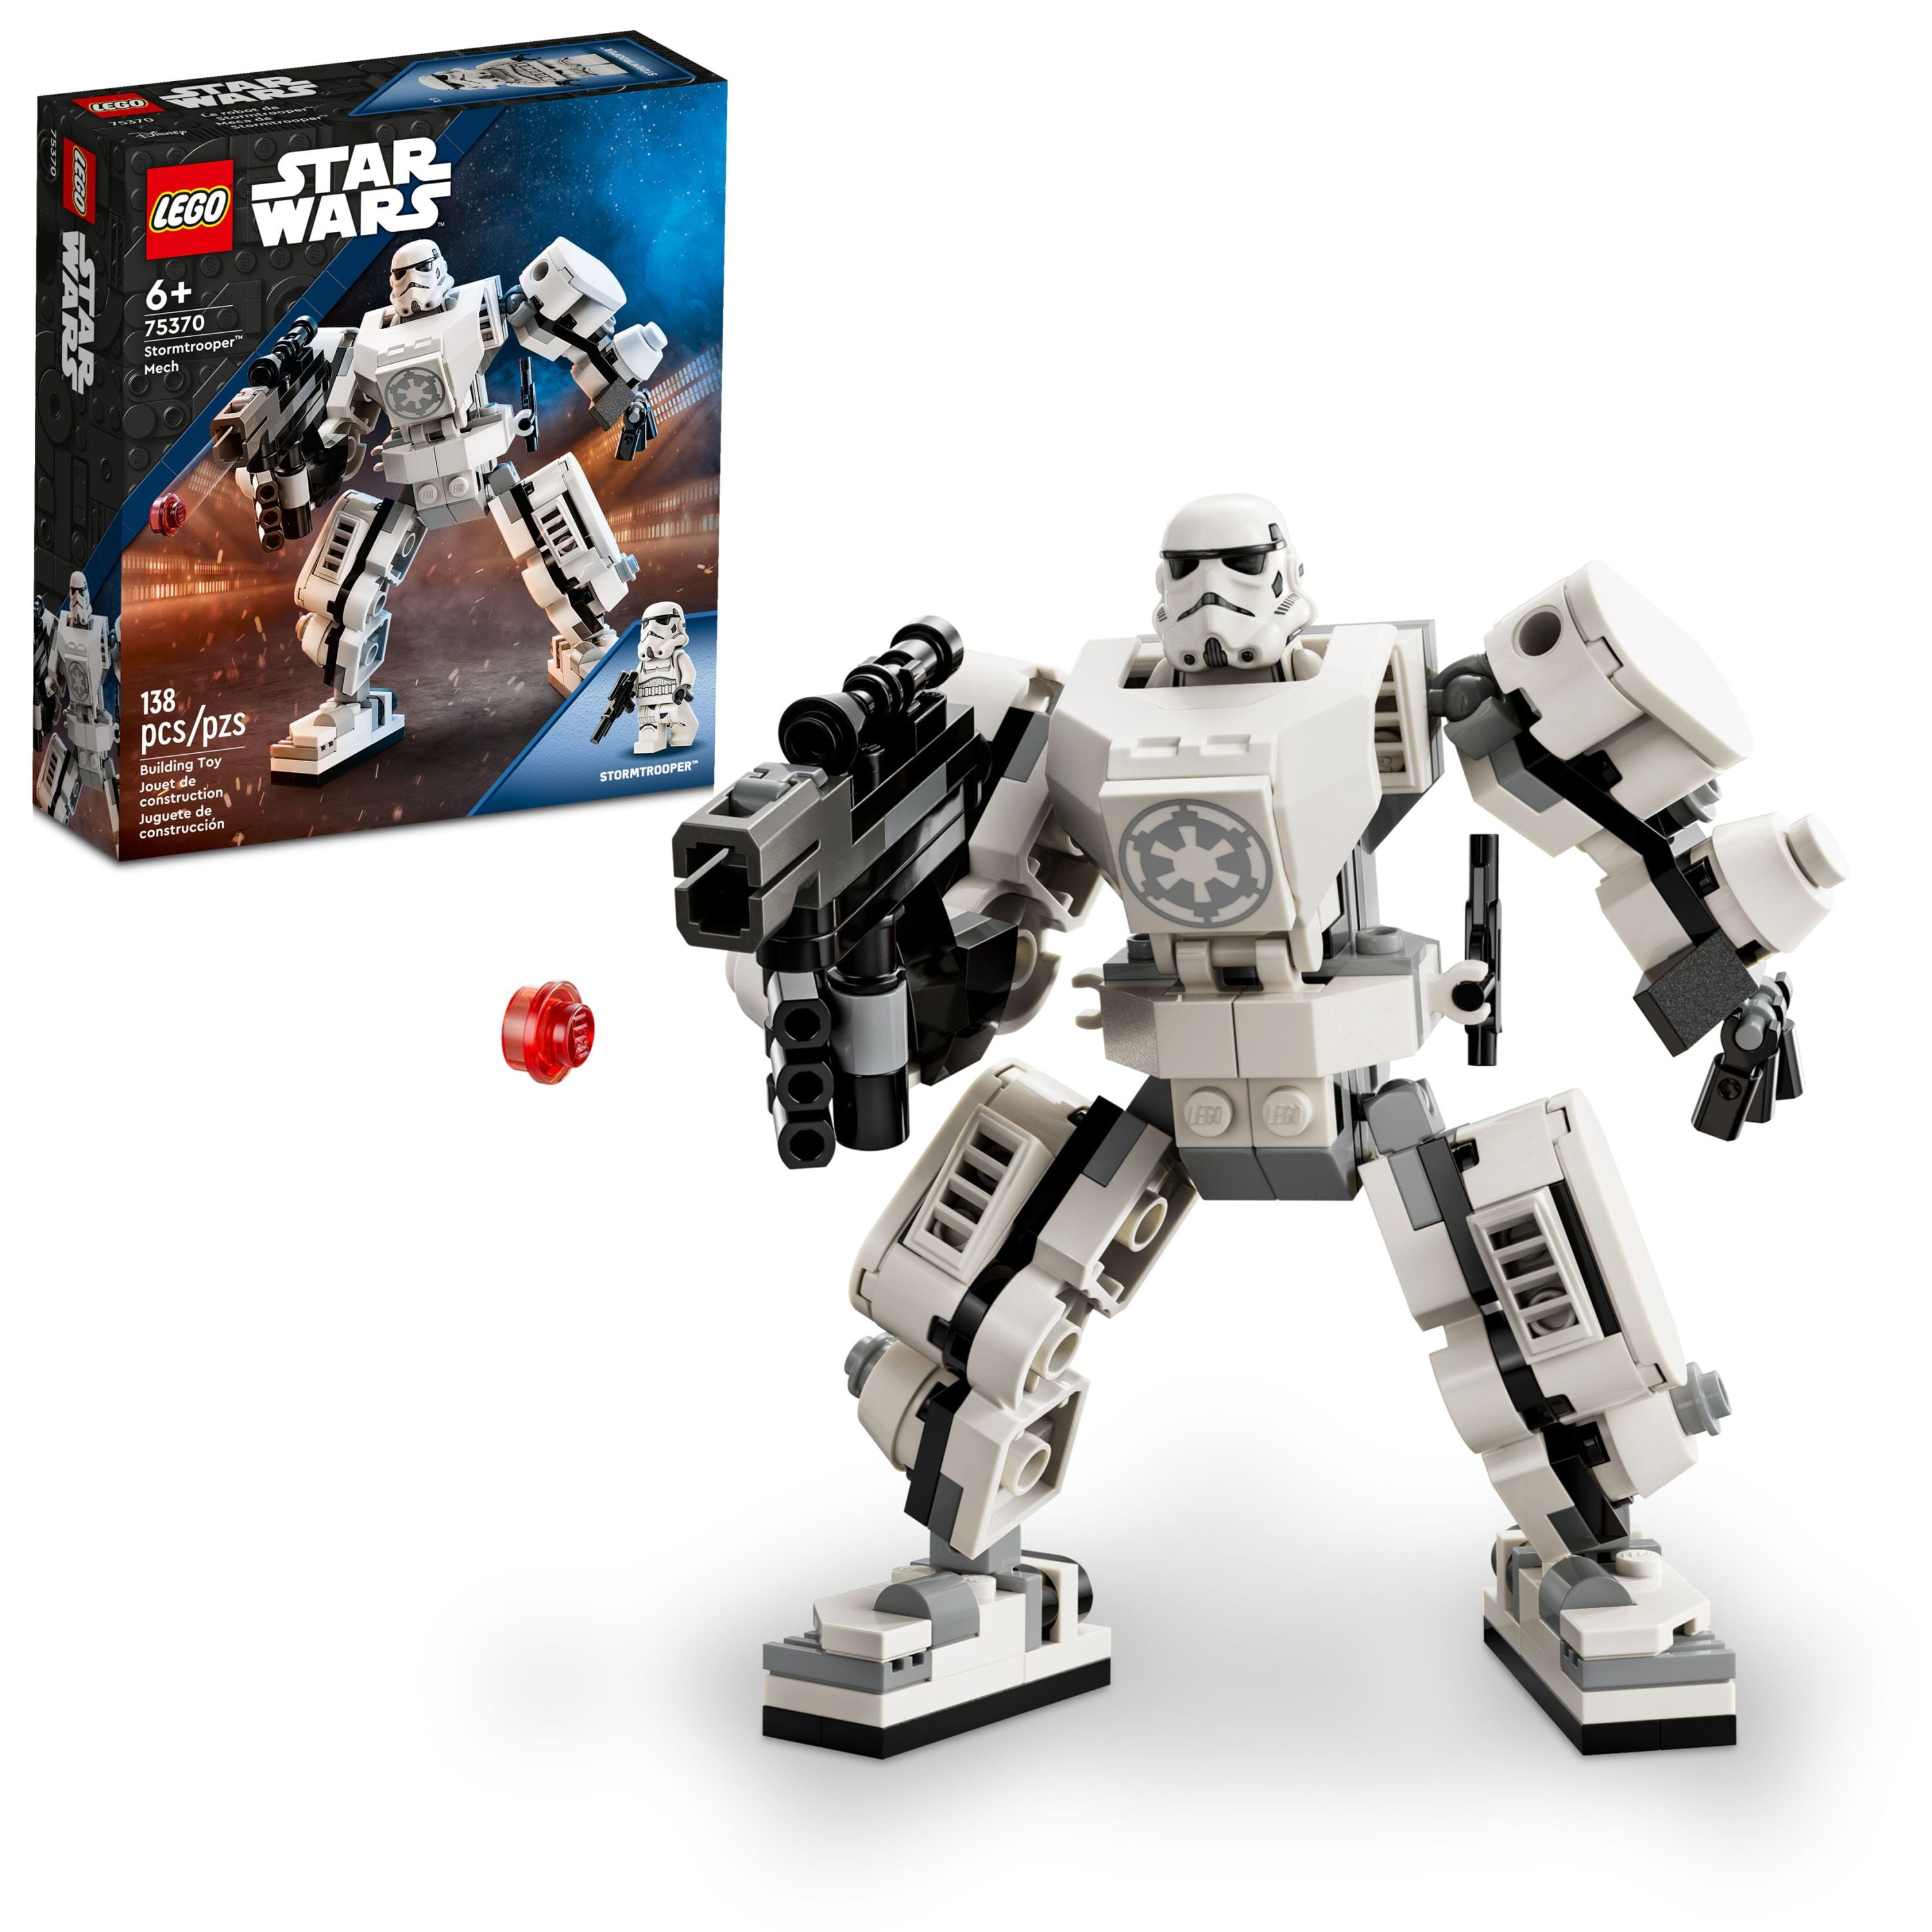 LPB - Epaulière ARC Double B&G poches Minifig Star Wars Lego Peint